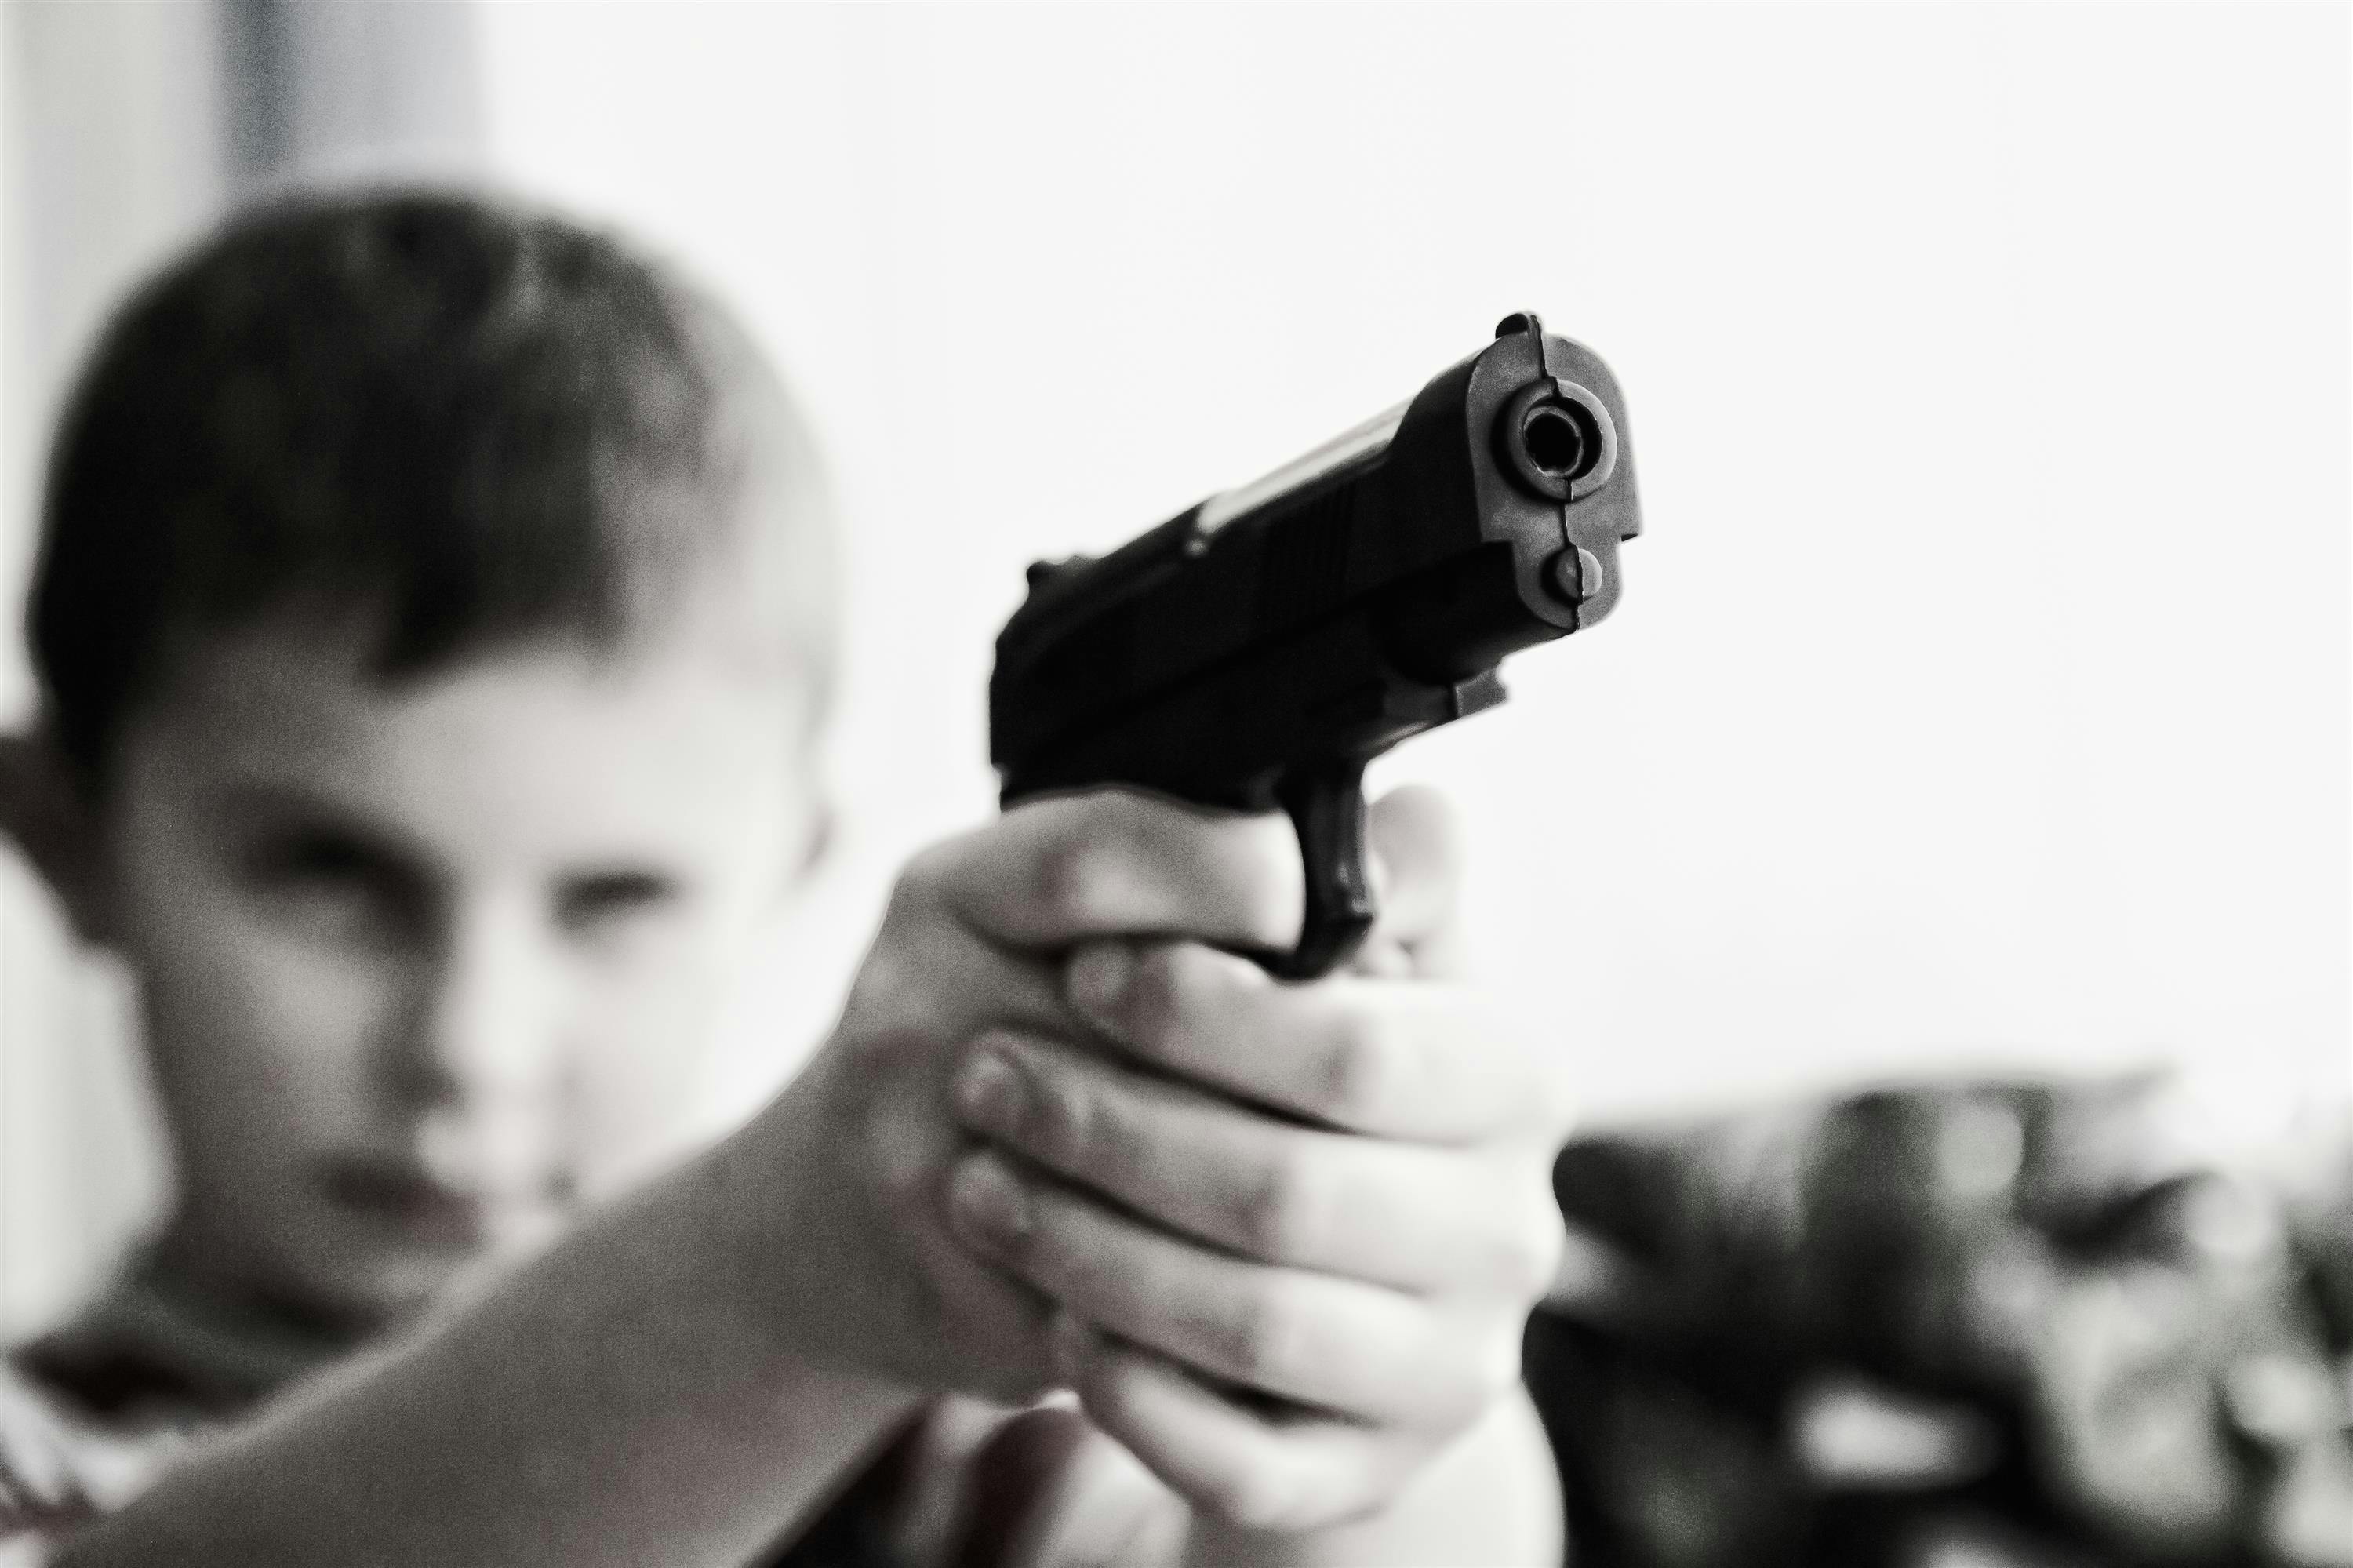 https://images.pexels.com/photos/52984/weapon-violence-children-child-52984.jpeg?auto=compress&cs=tinysrgb&dpr=3&h=750&w=1260